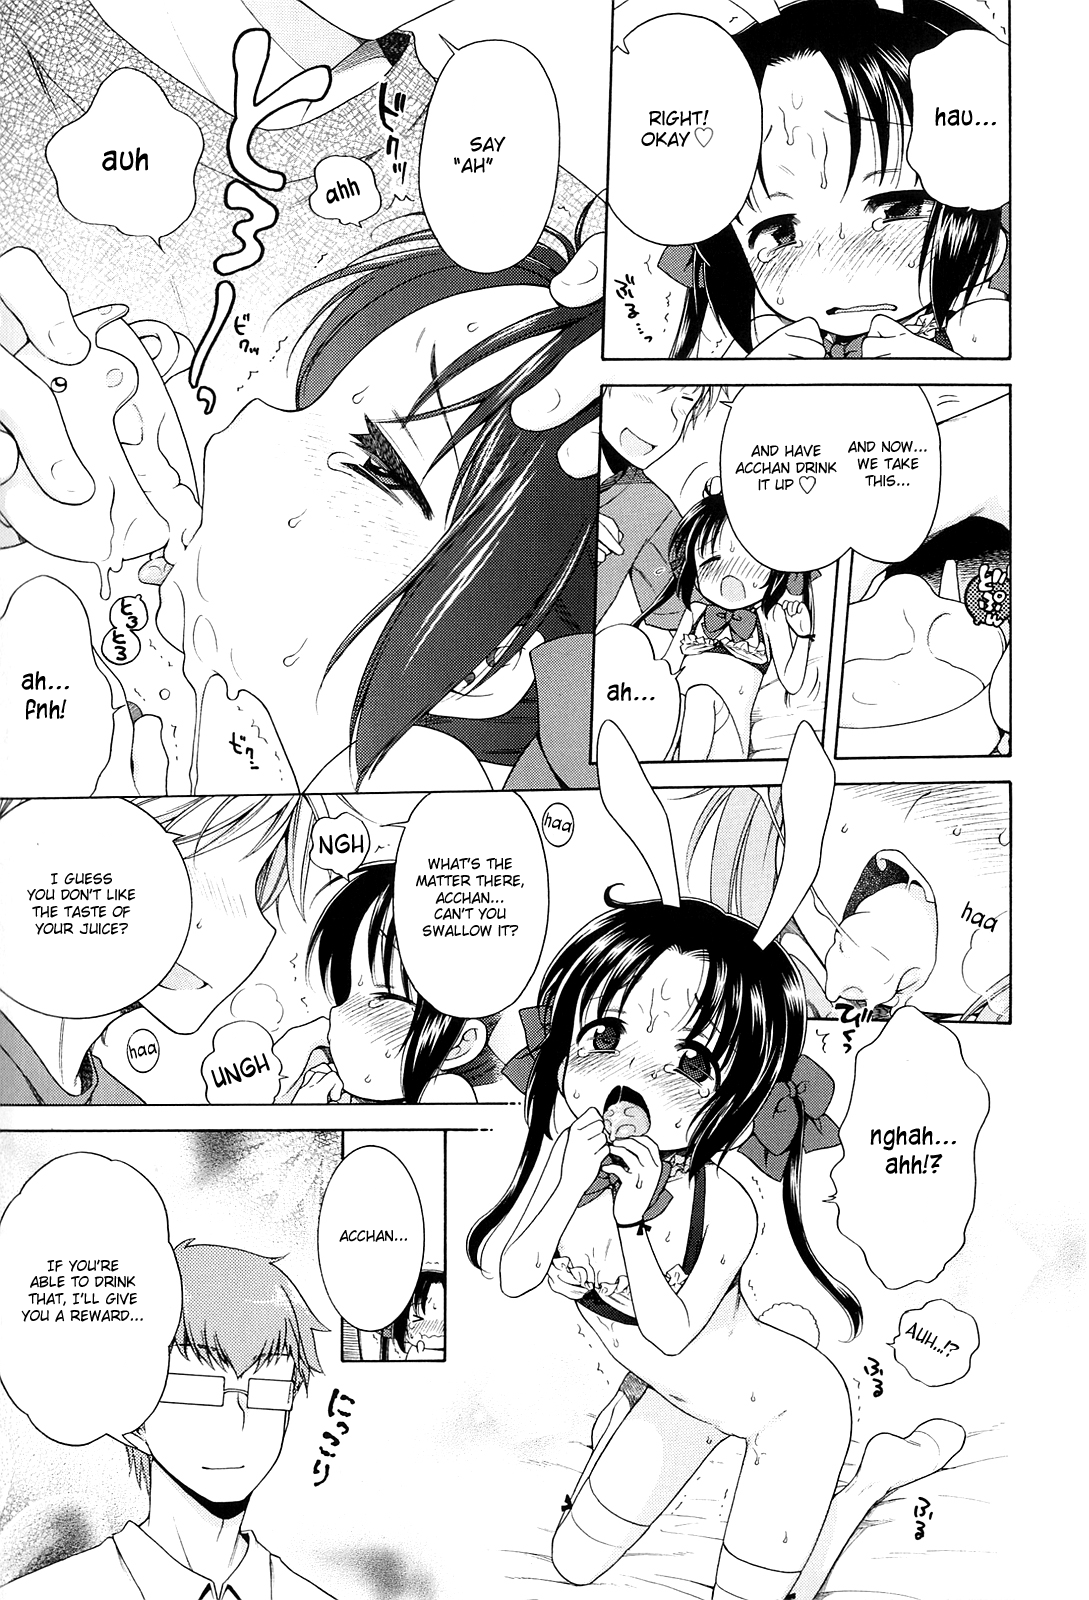 The Light of Tsukimi Manor 1-6 hentai manga picture 120